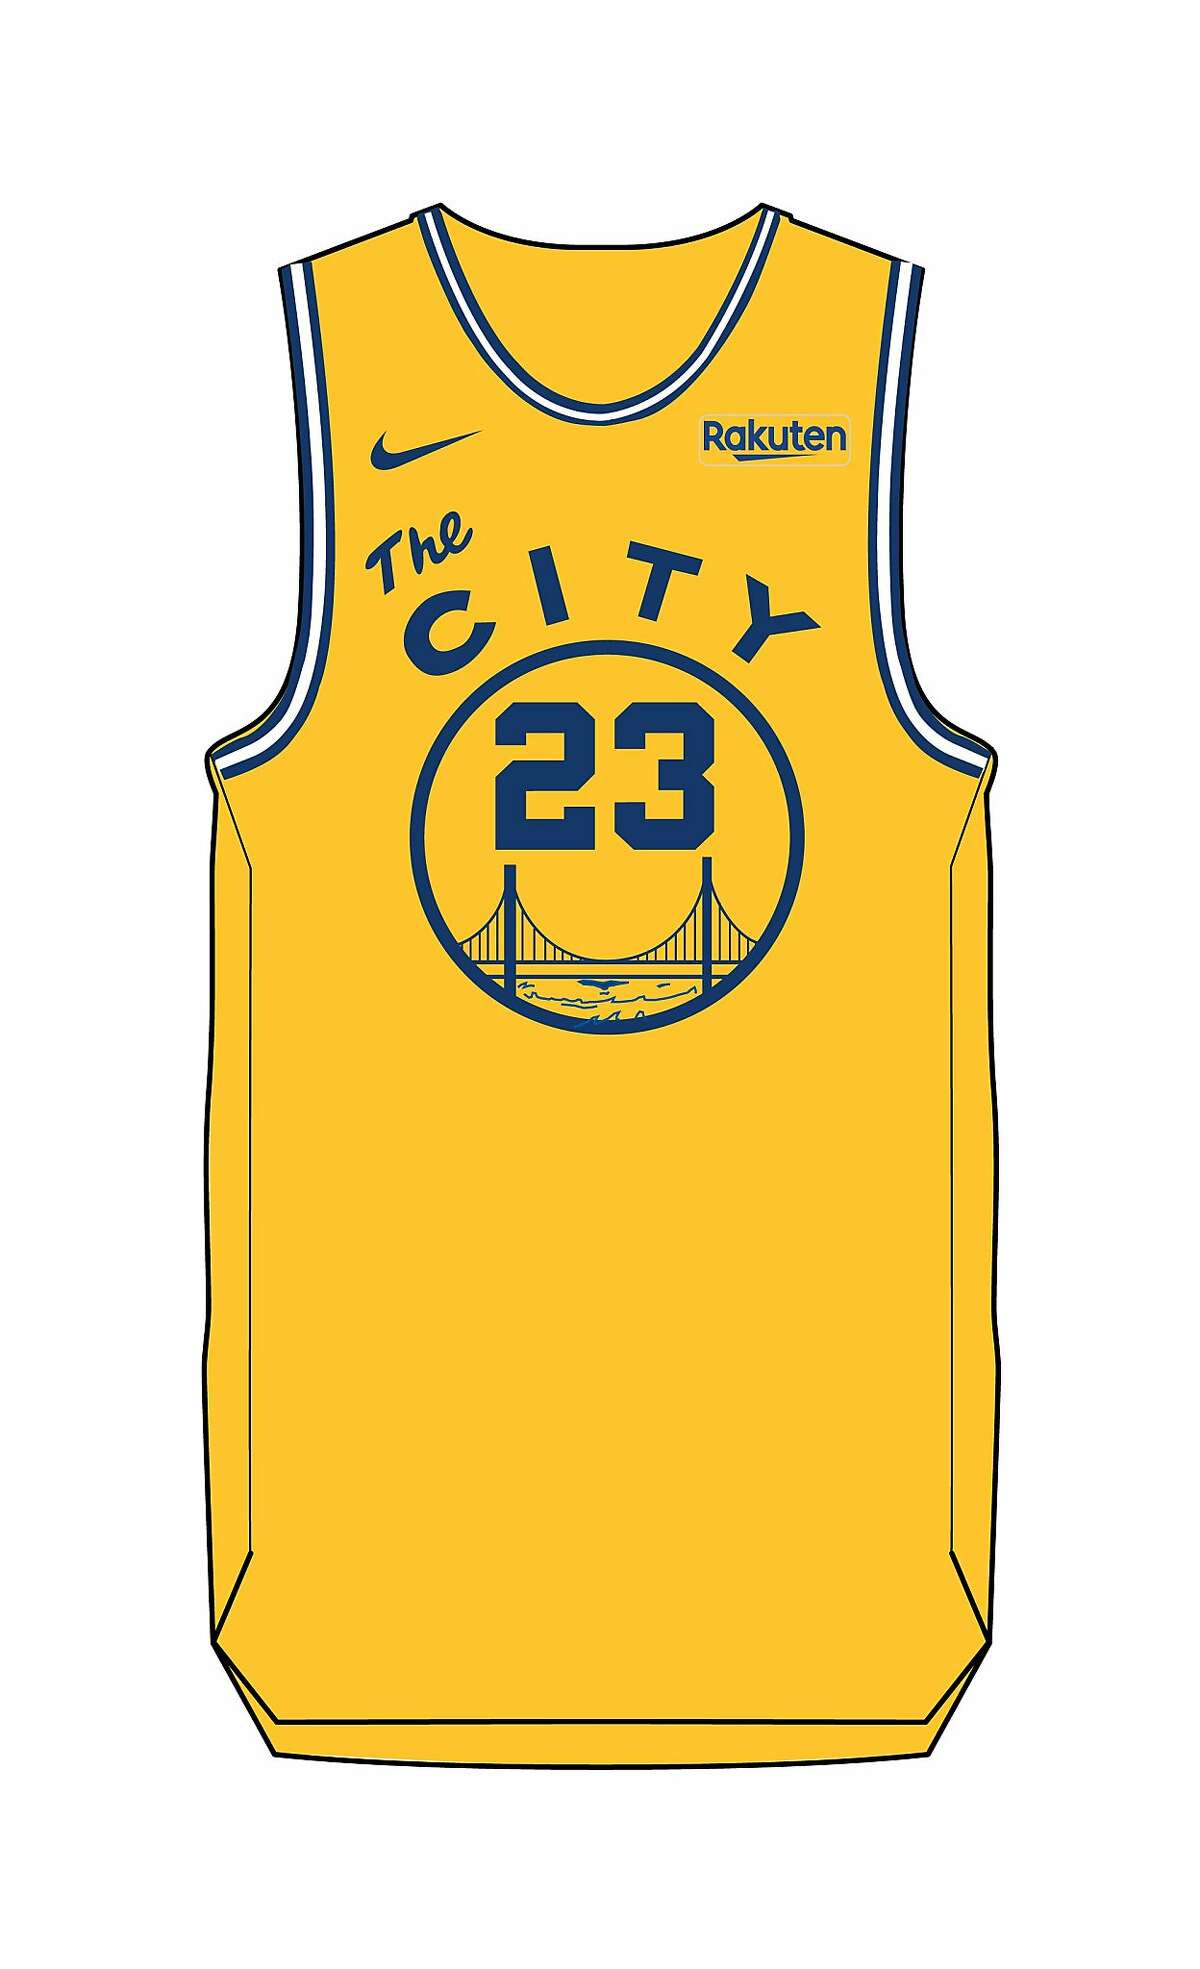 Golden State Warriors bringing back 'The City' jerseys - ABC7 San Francisco